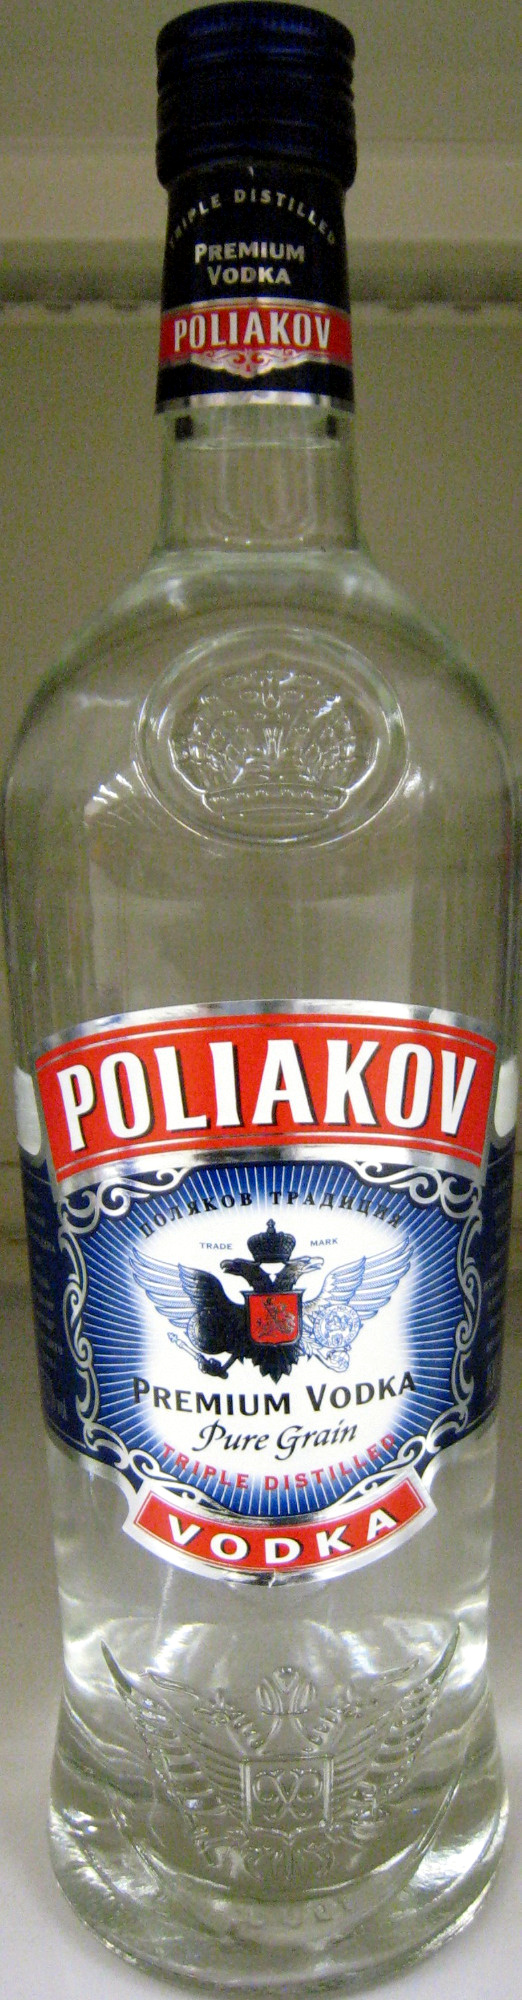 Premium Vodka - Produit